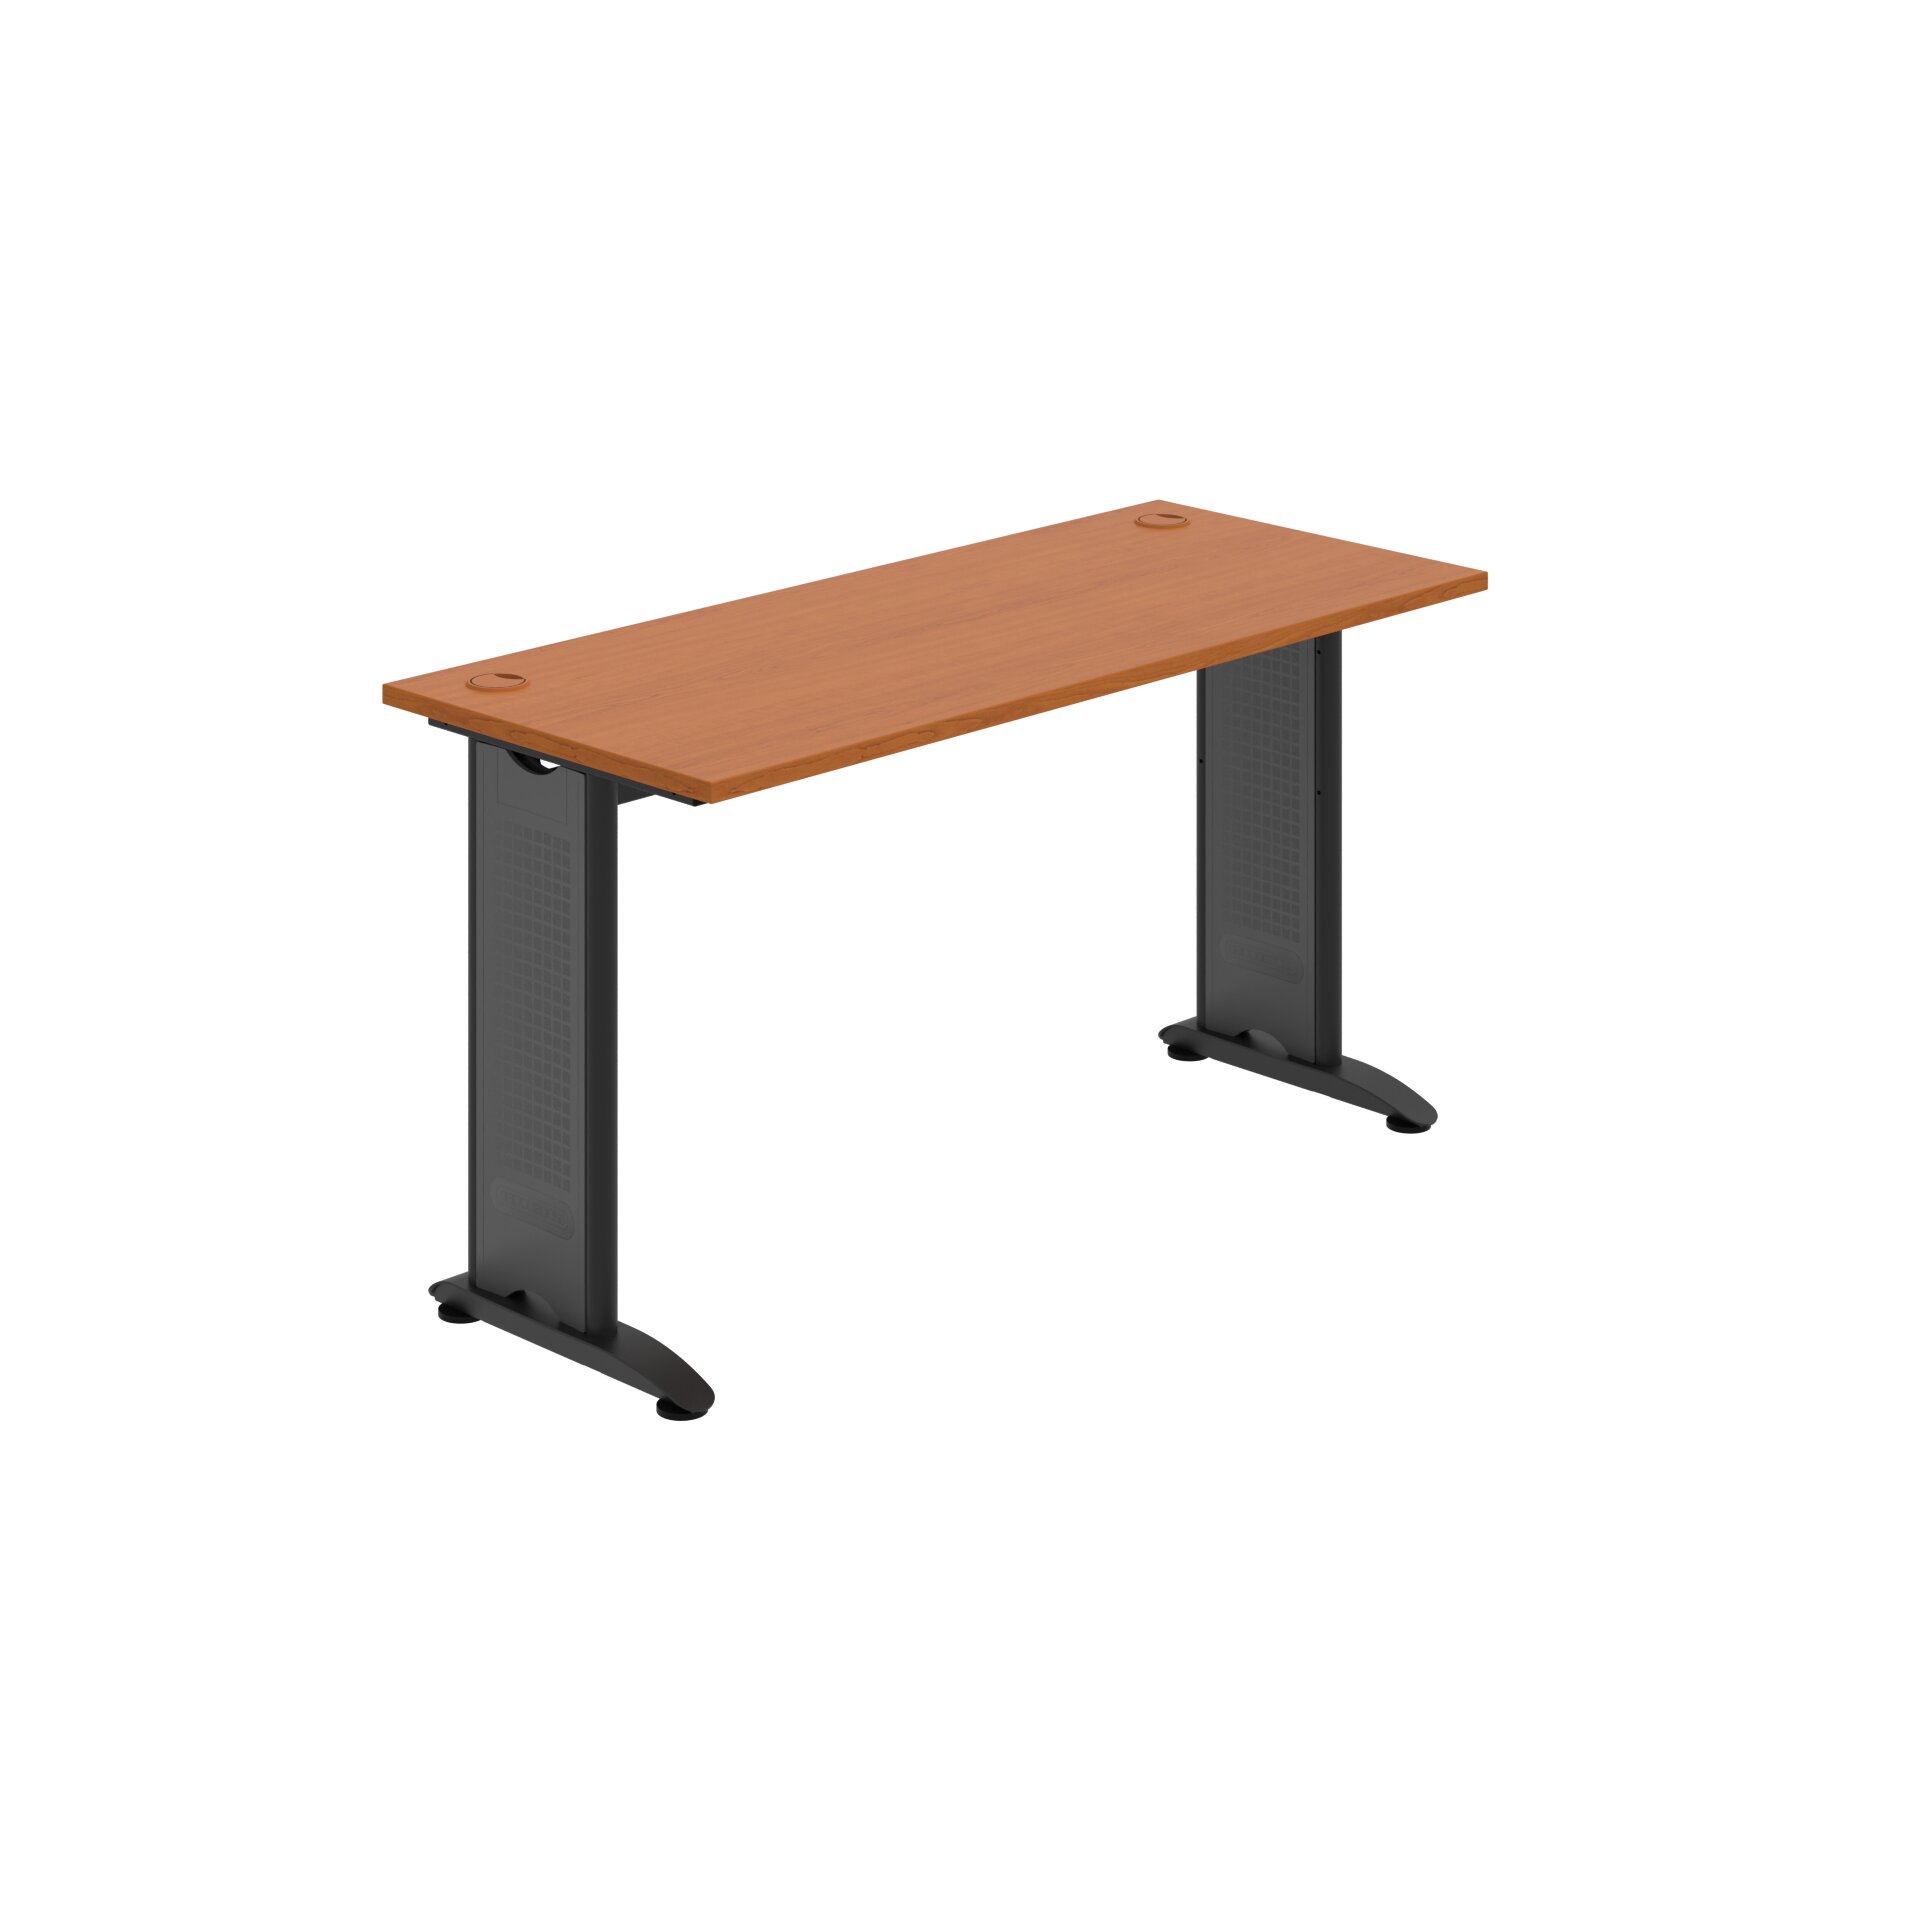 Hipso Adjustable Standing Desk - 45 x 24